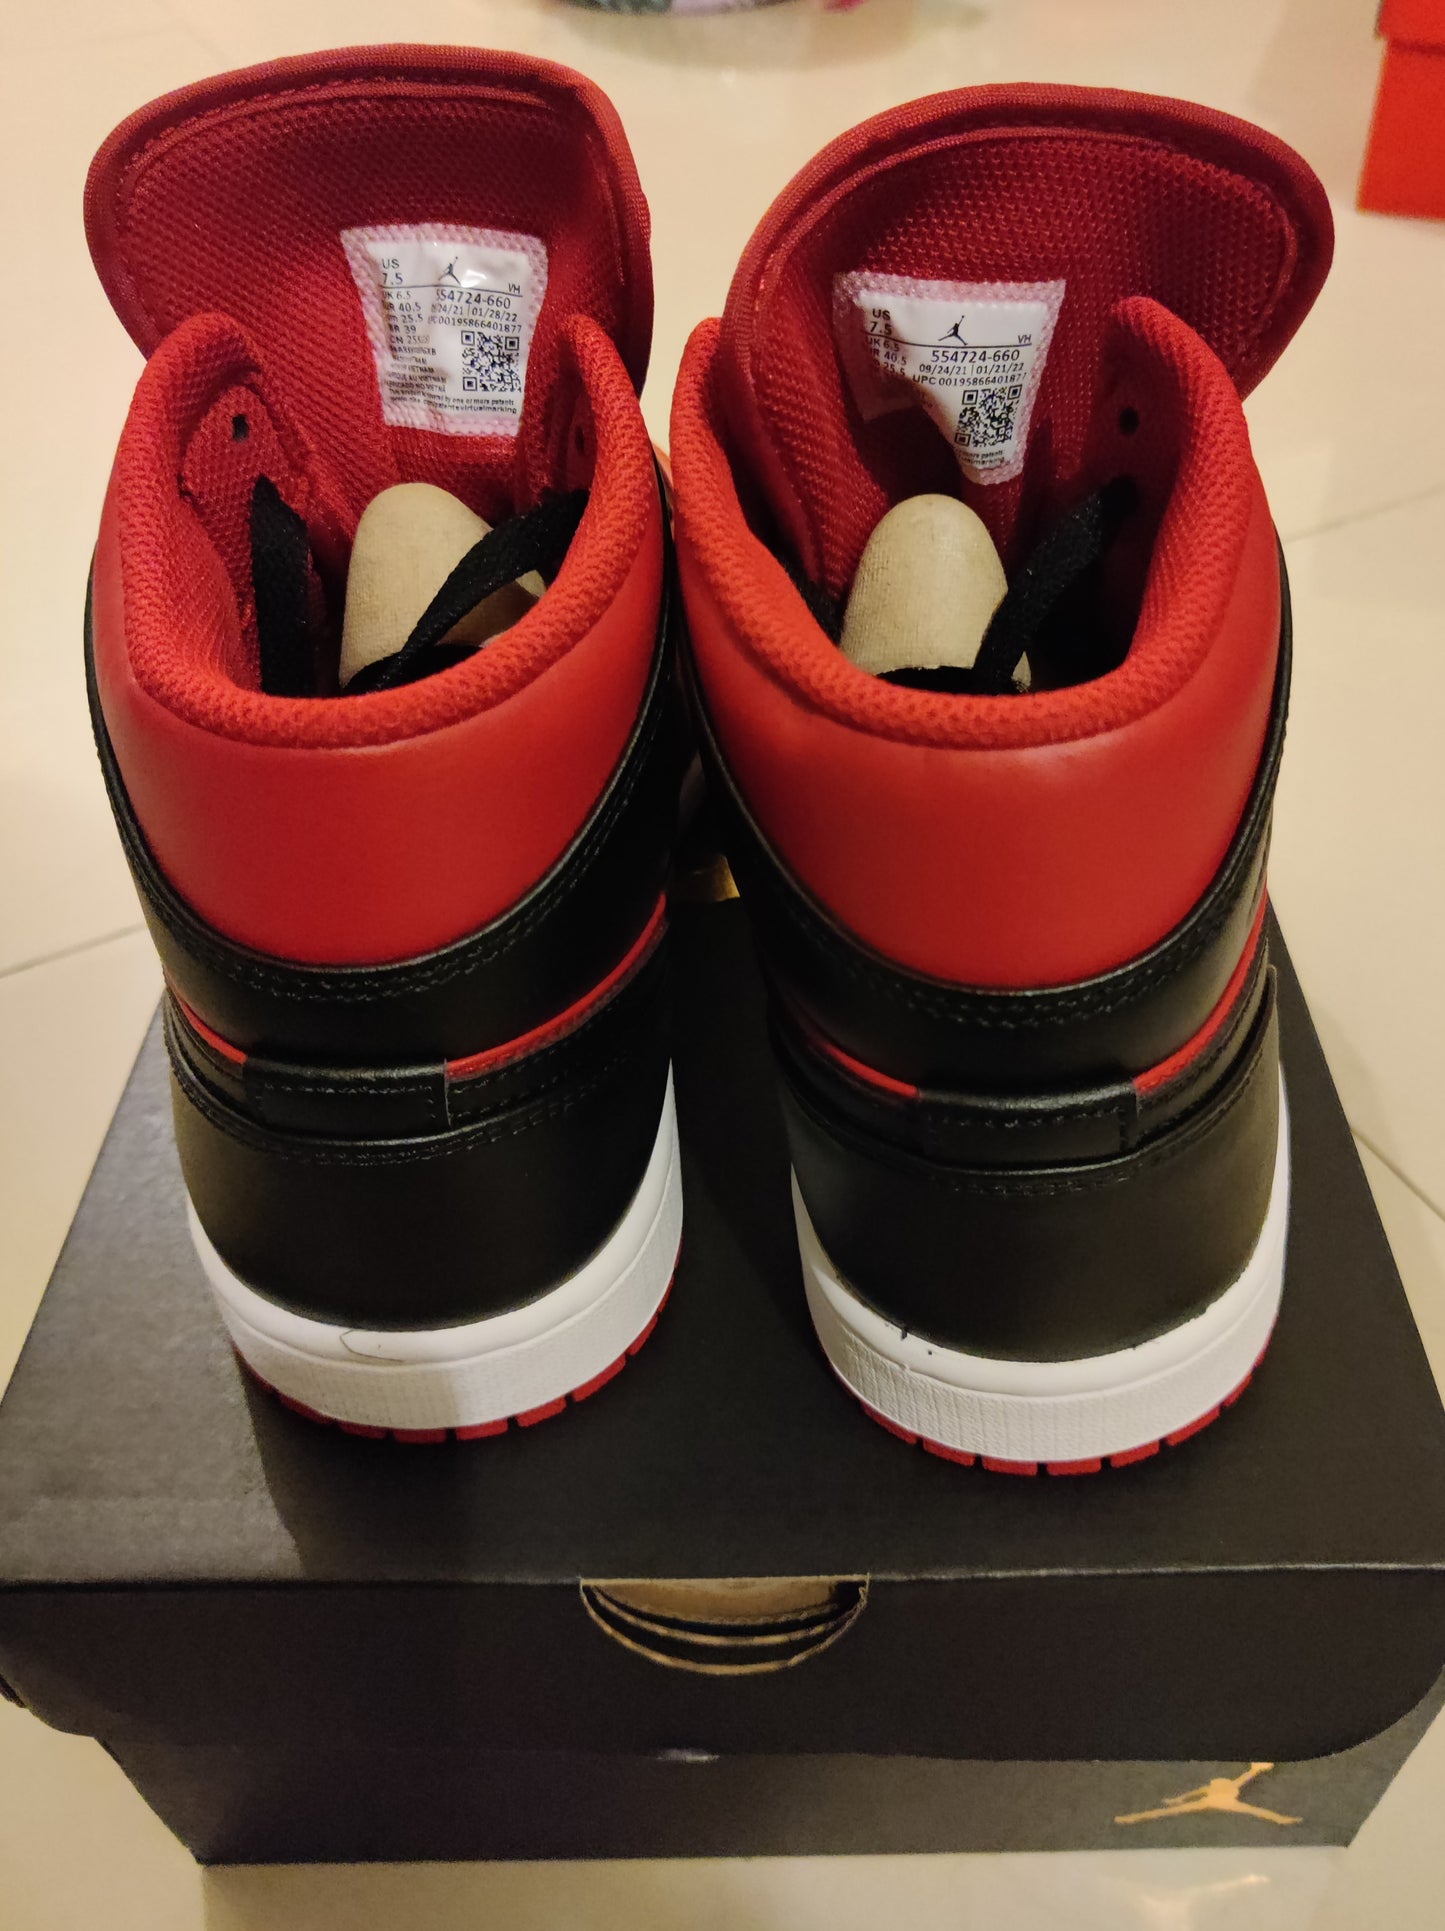 Nike Air Jordan 1 Mid "Reverse Bred" Gym Red Black White 554724-660